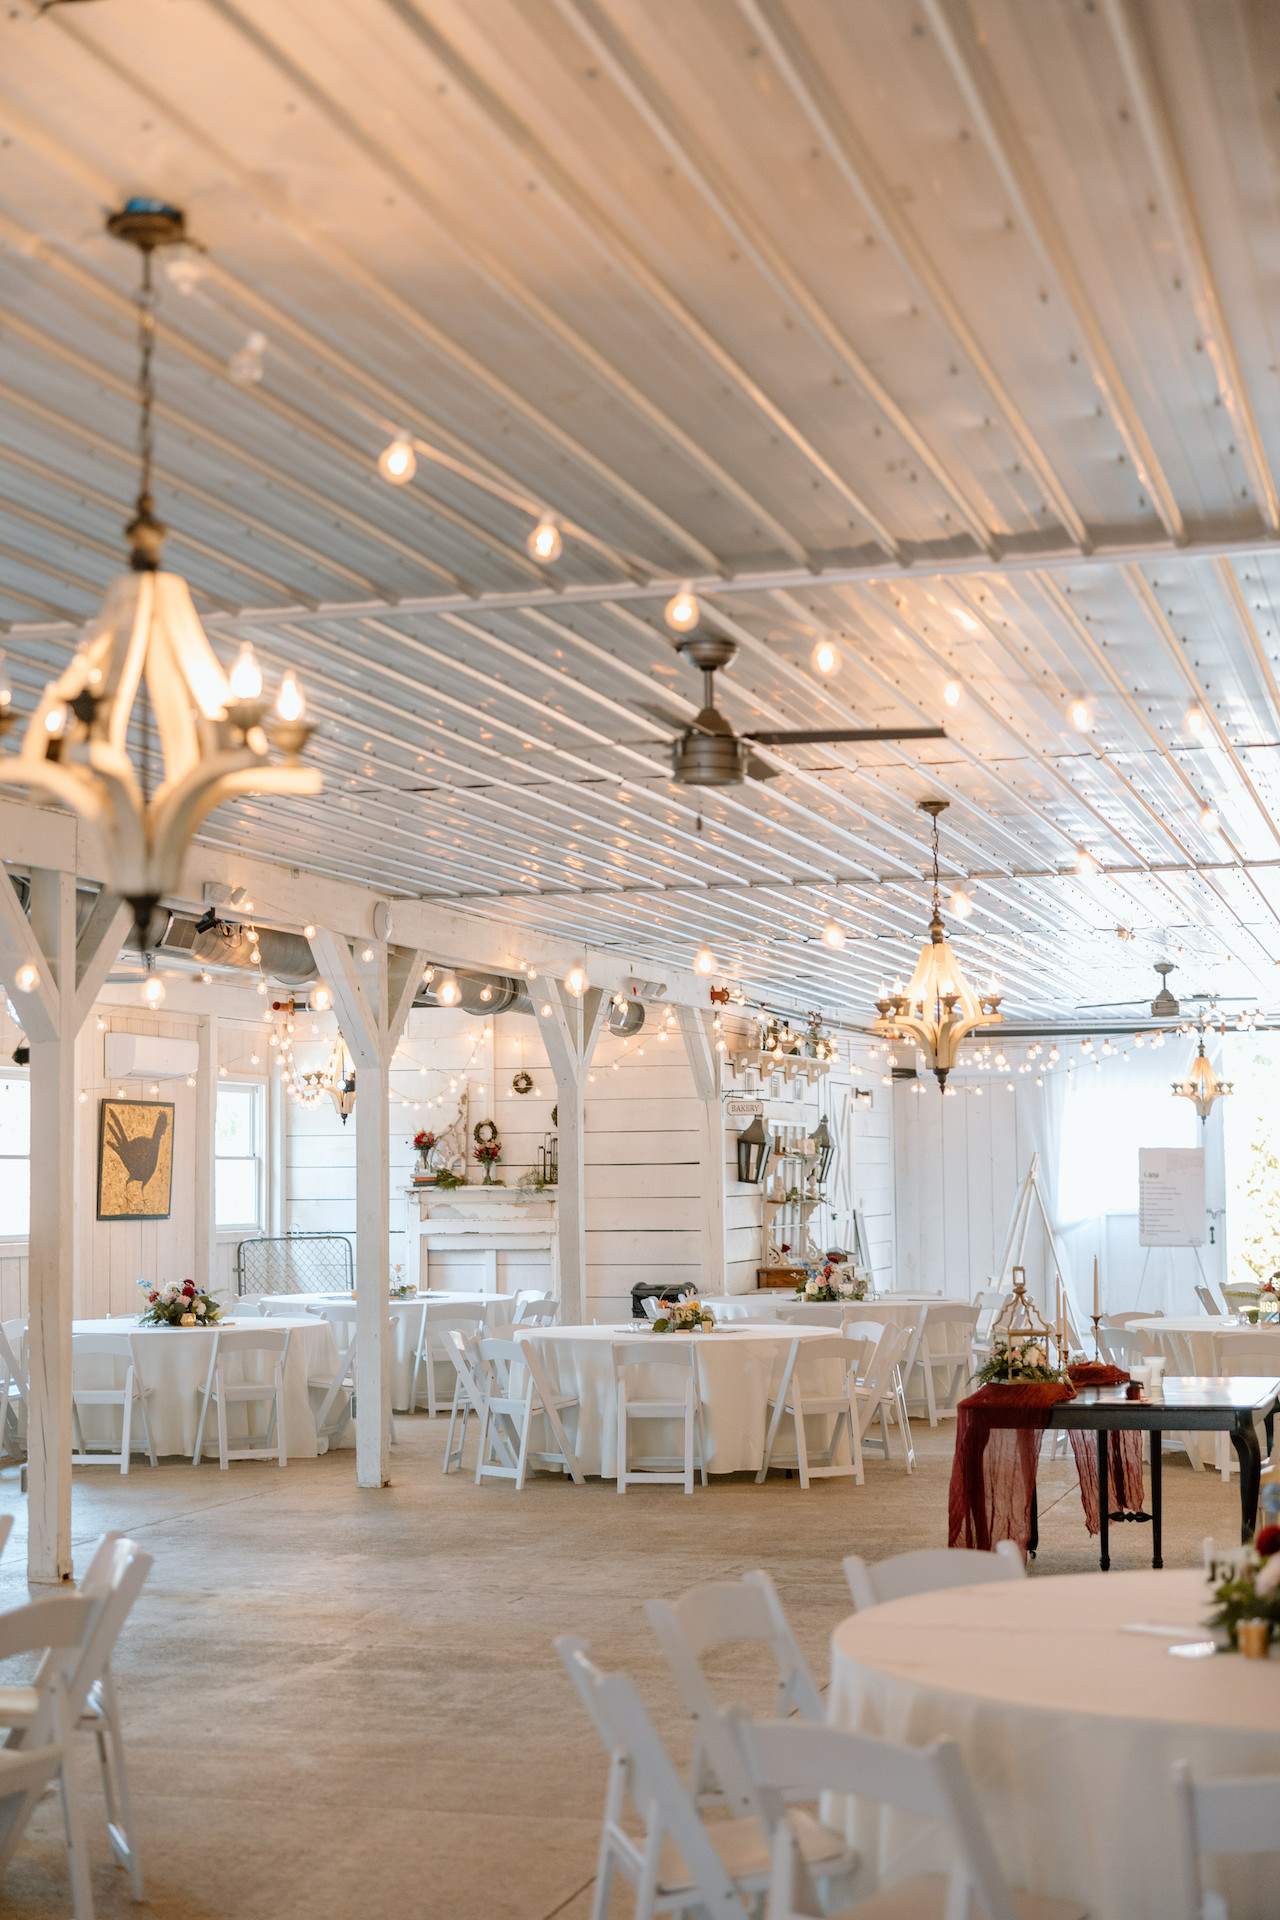 Indoor Barn Wedding Reception Space